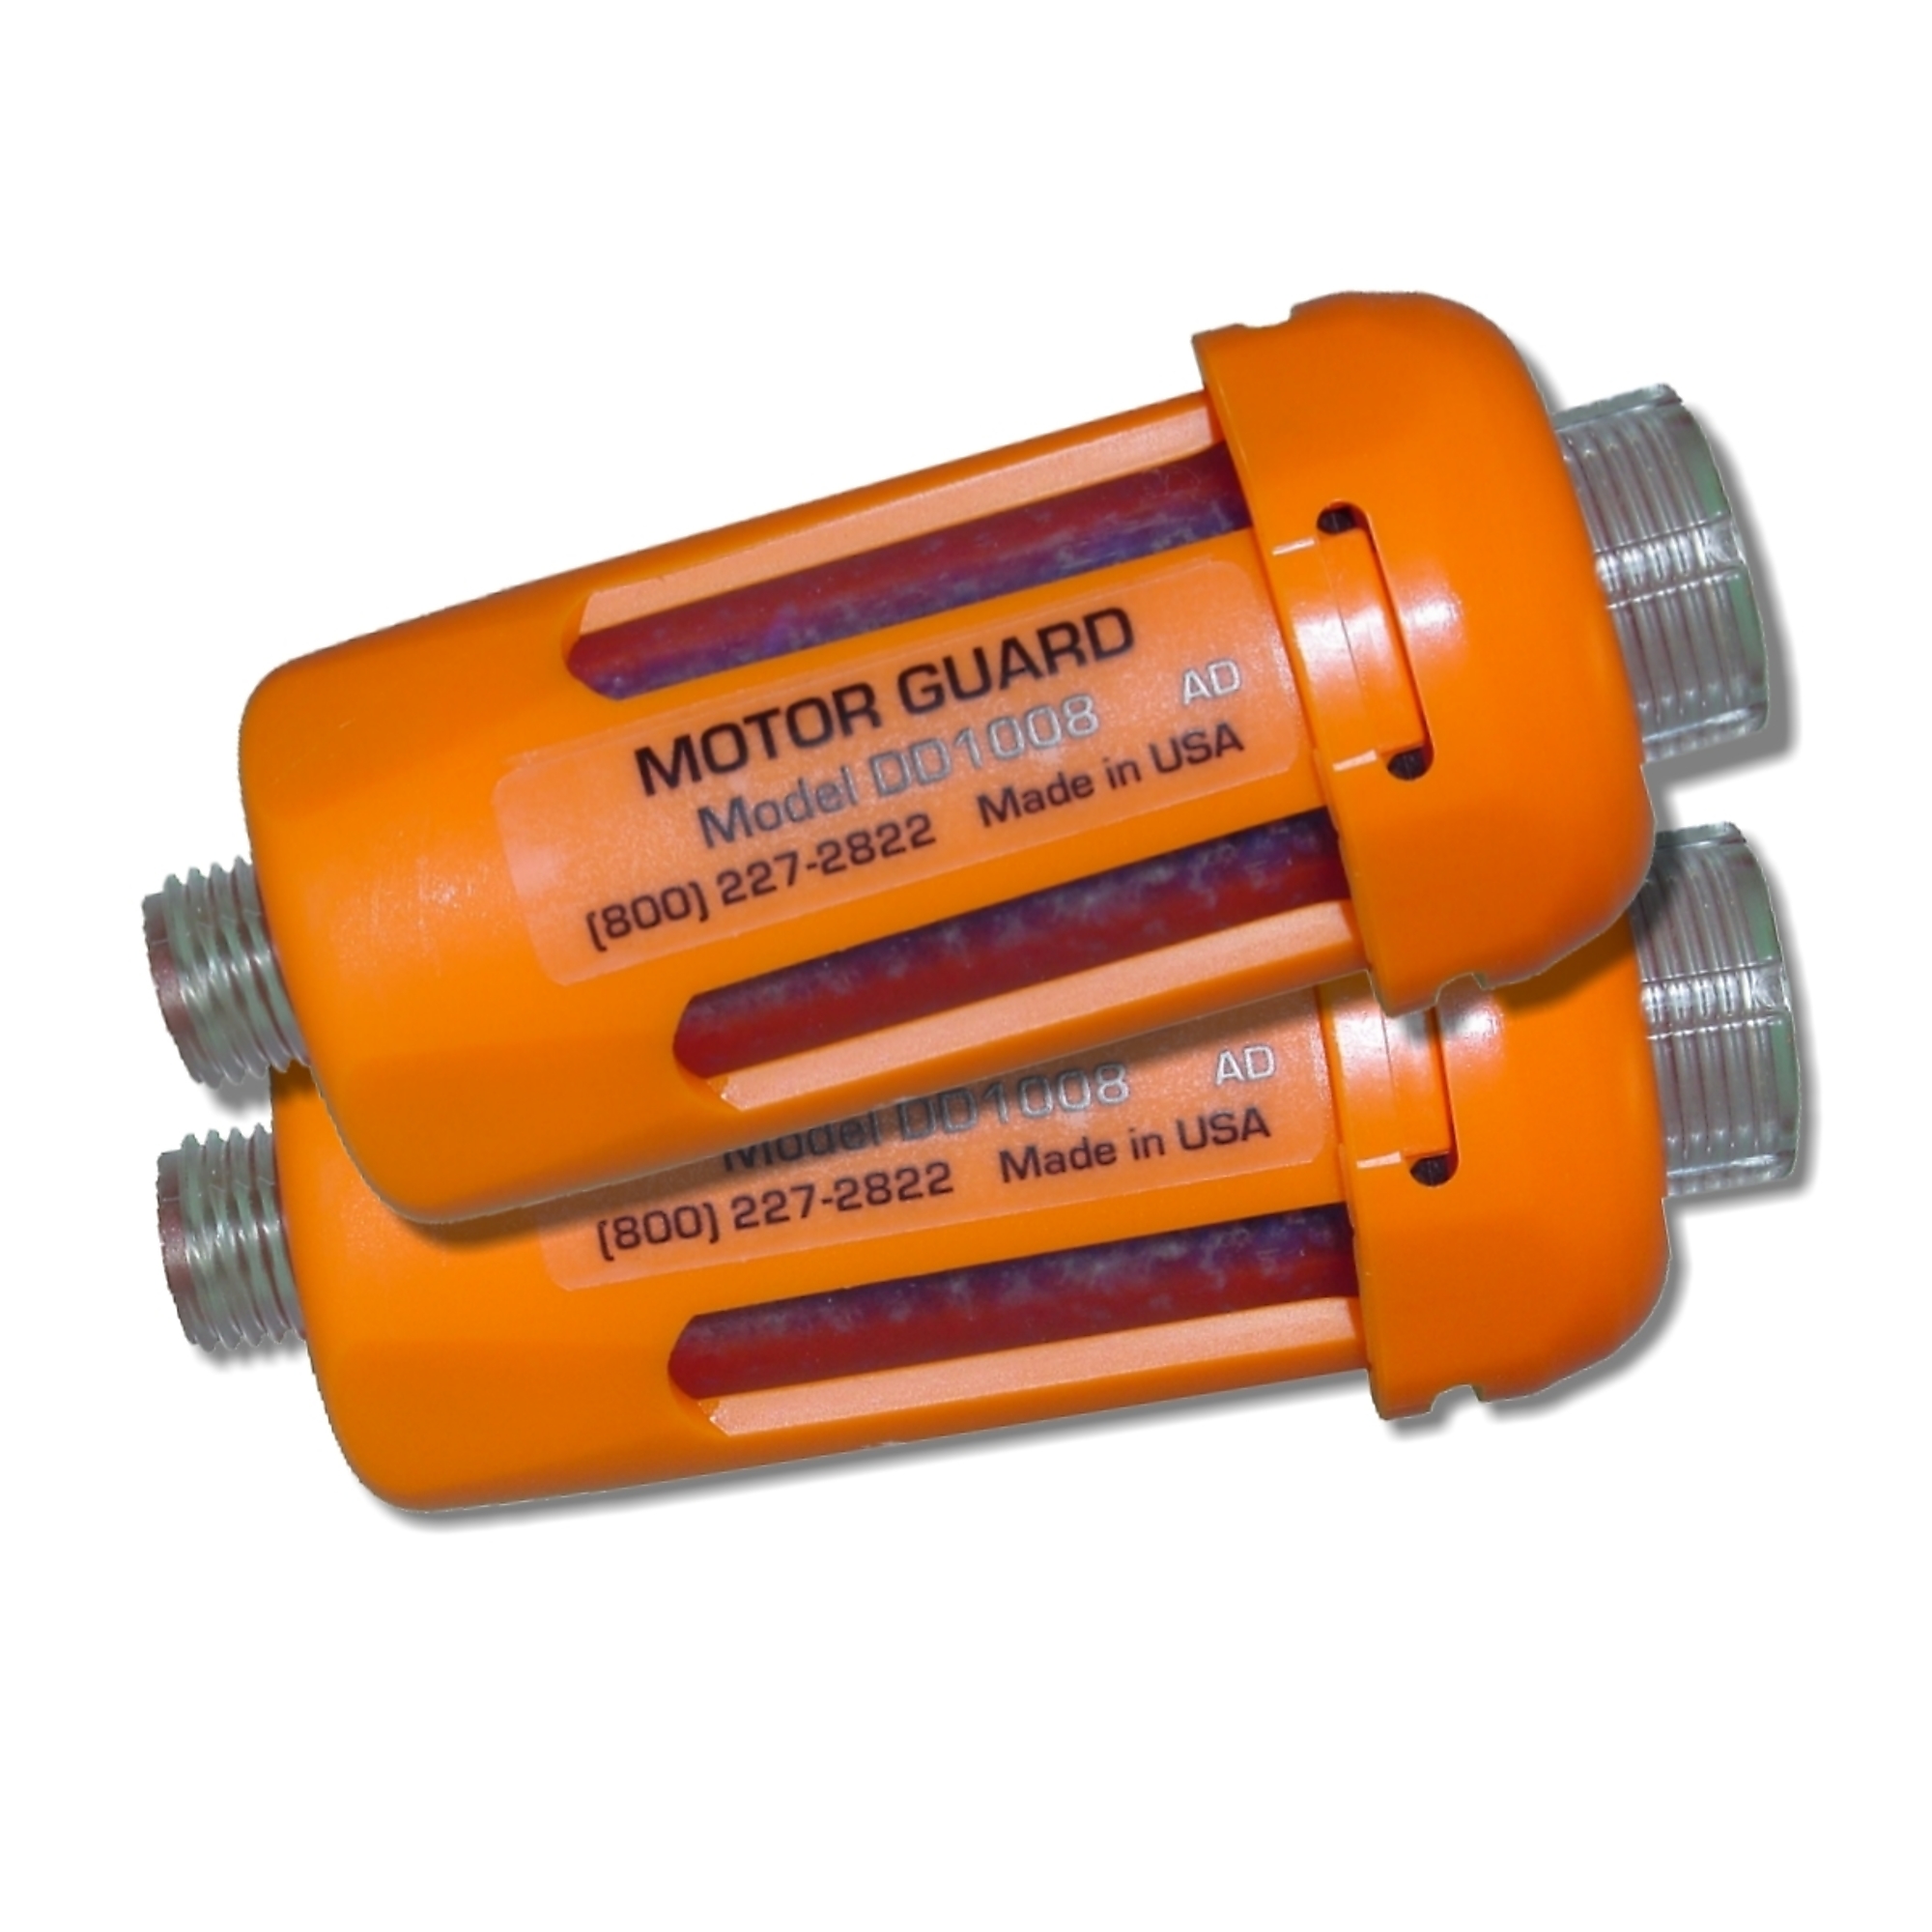 Motor Guard, Disposable Mini Desiccant Filter/Dryer Pack of 2 Model DD1008-2